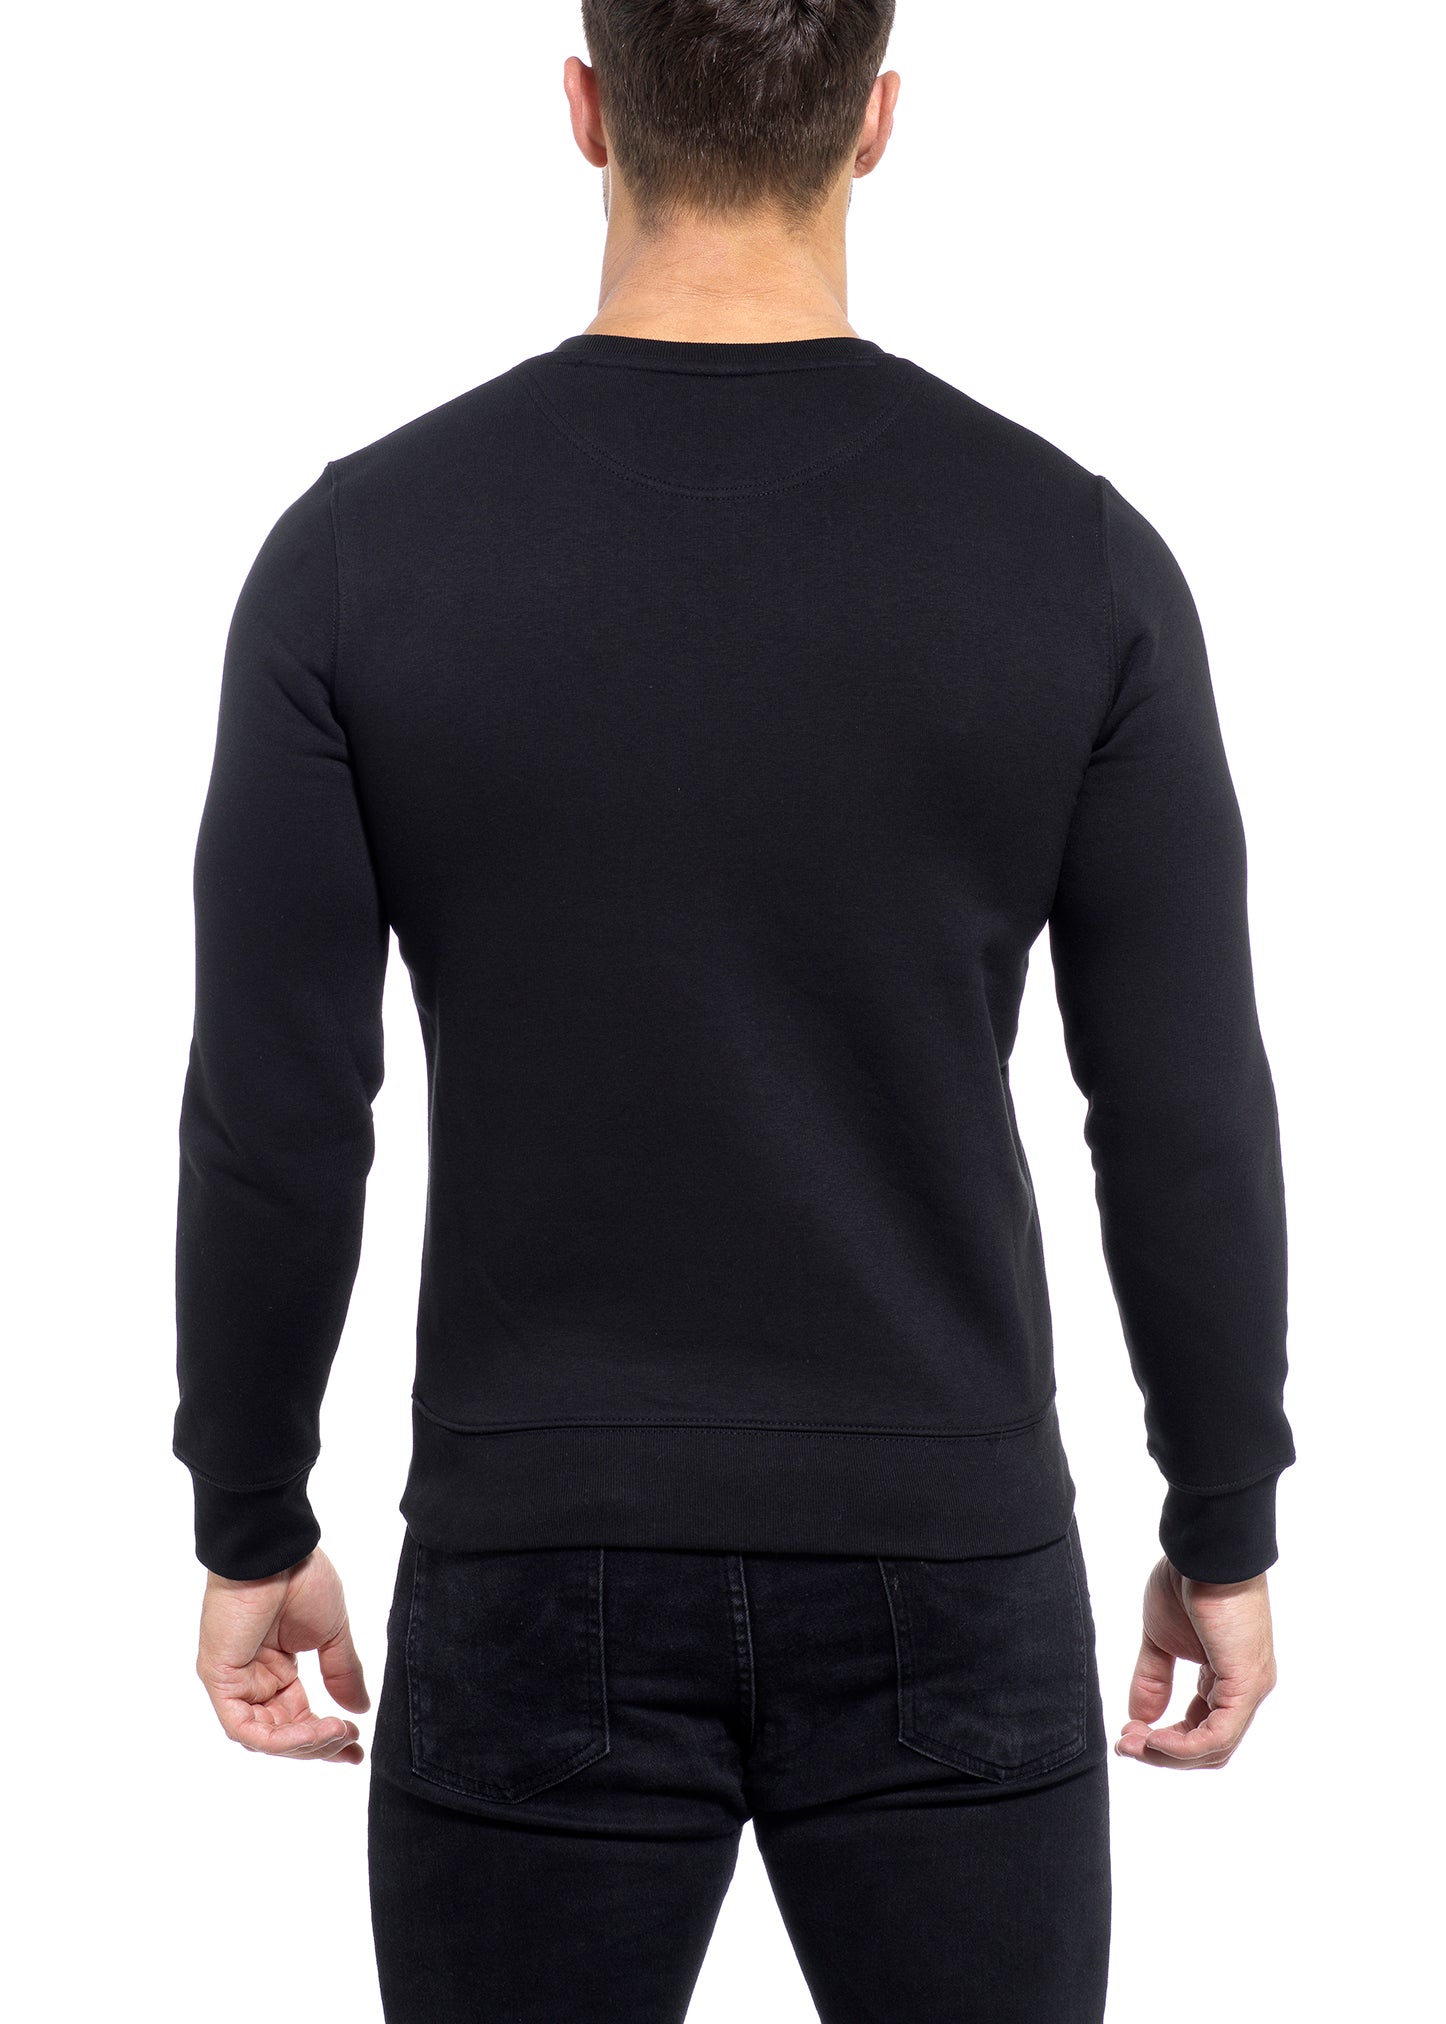 Muscle Fit Sweatshirt Black